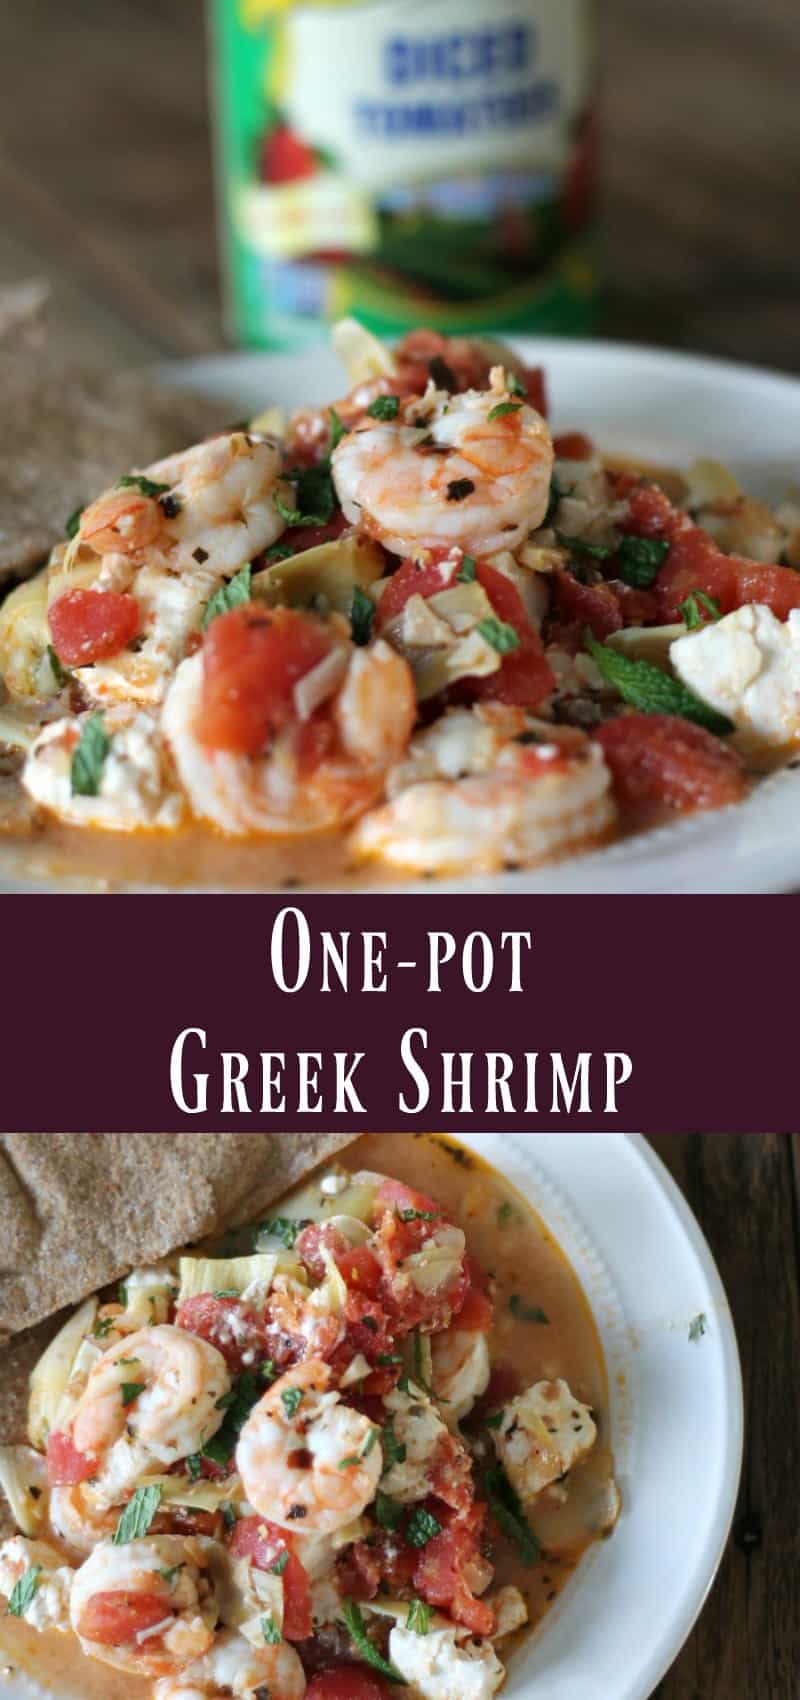 Healthy One-pot Greek Shrimp pantry meal recipe